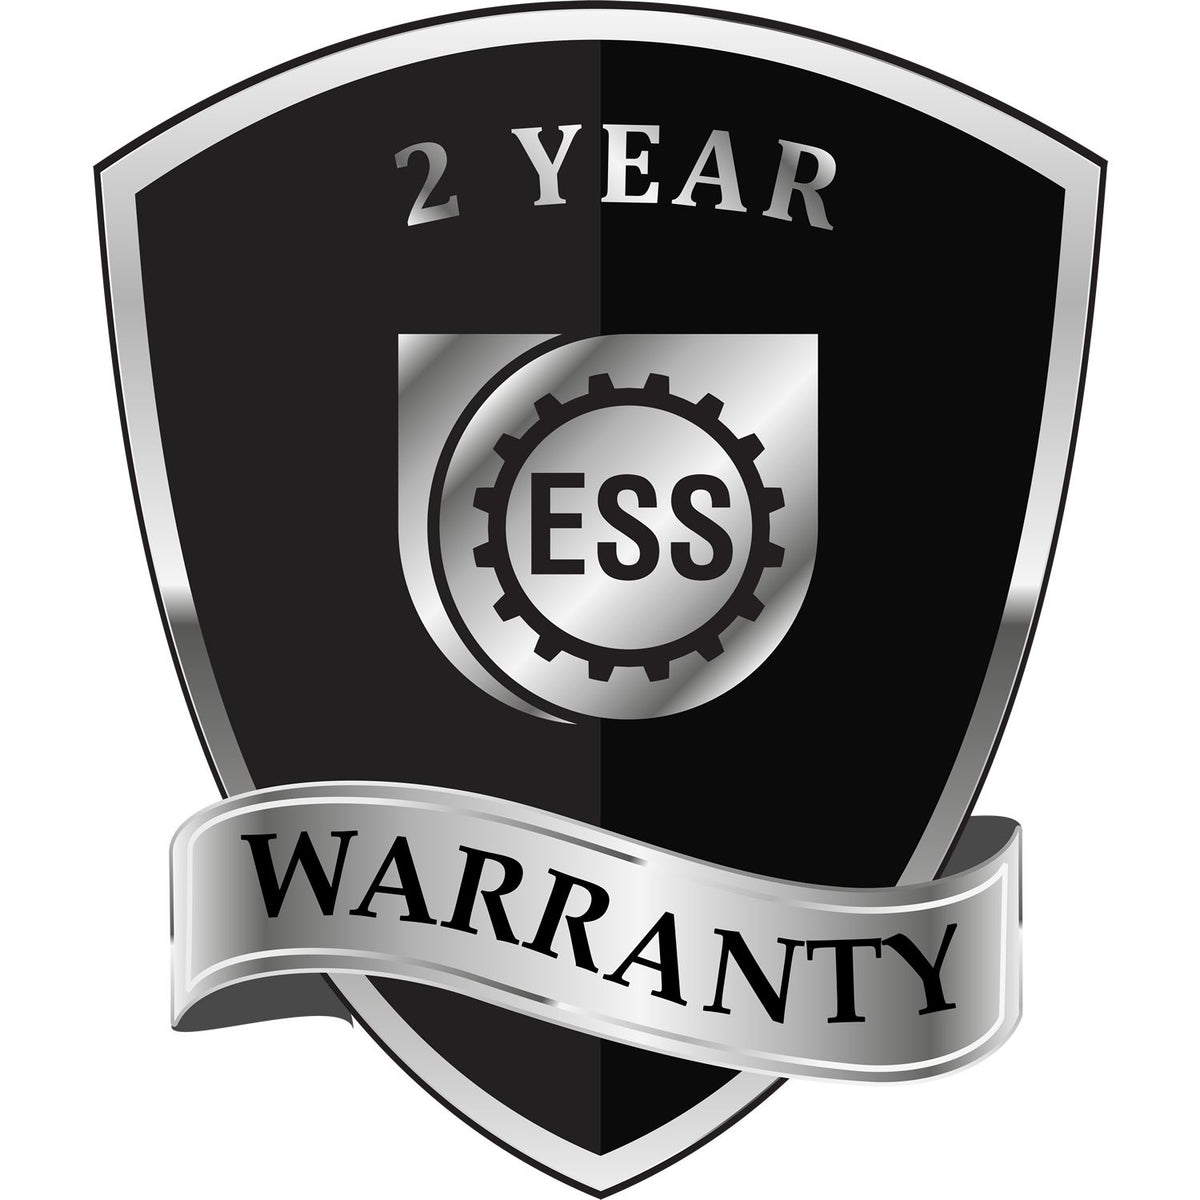 A badge or emblem showing a warranty icon for the Handheld Arkansas Land Surveyor Seal